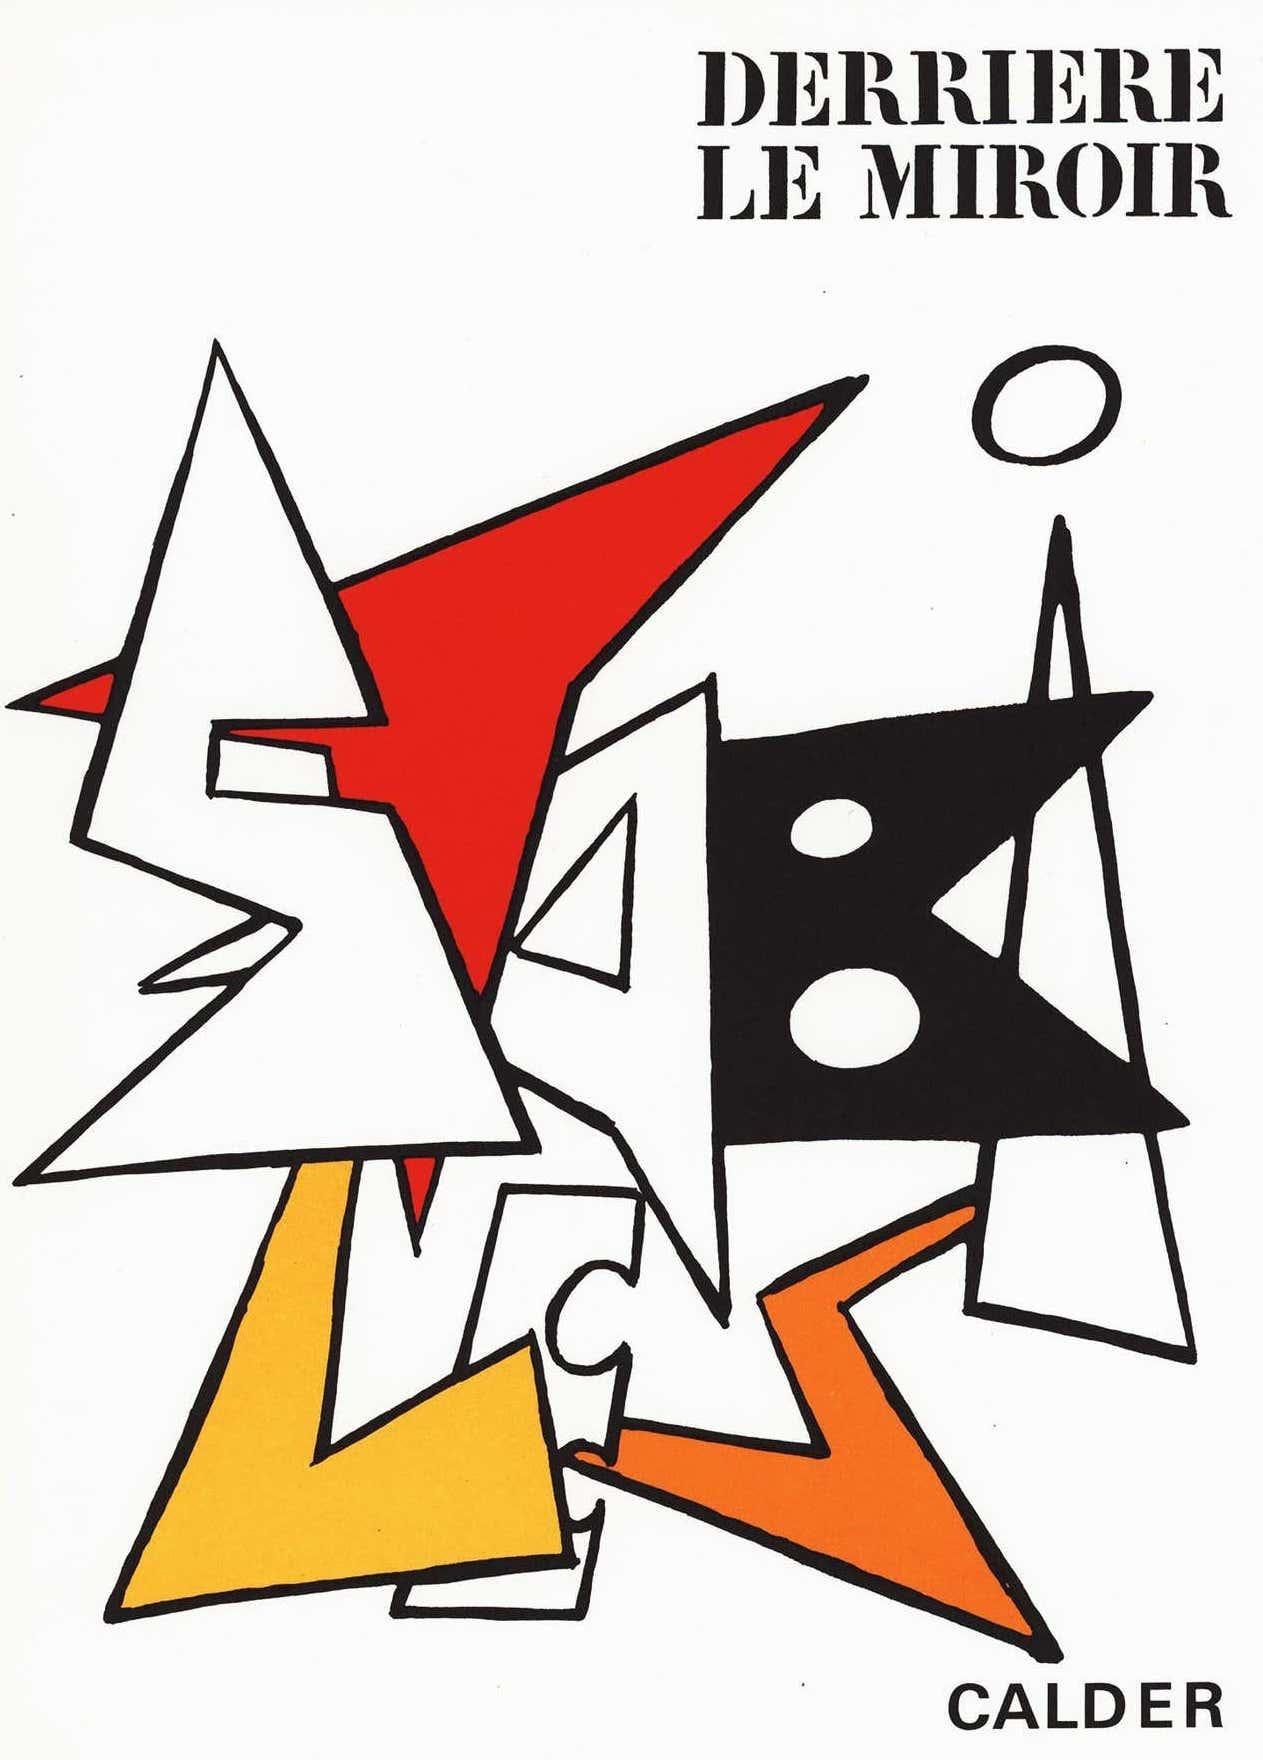 1960's Alexander Calder lithographic cover (from Derrière le miroir) - Print by (after) Alexander Calder